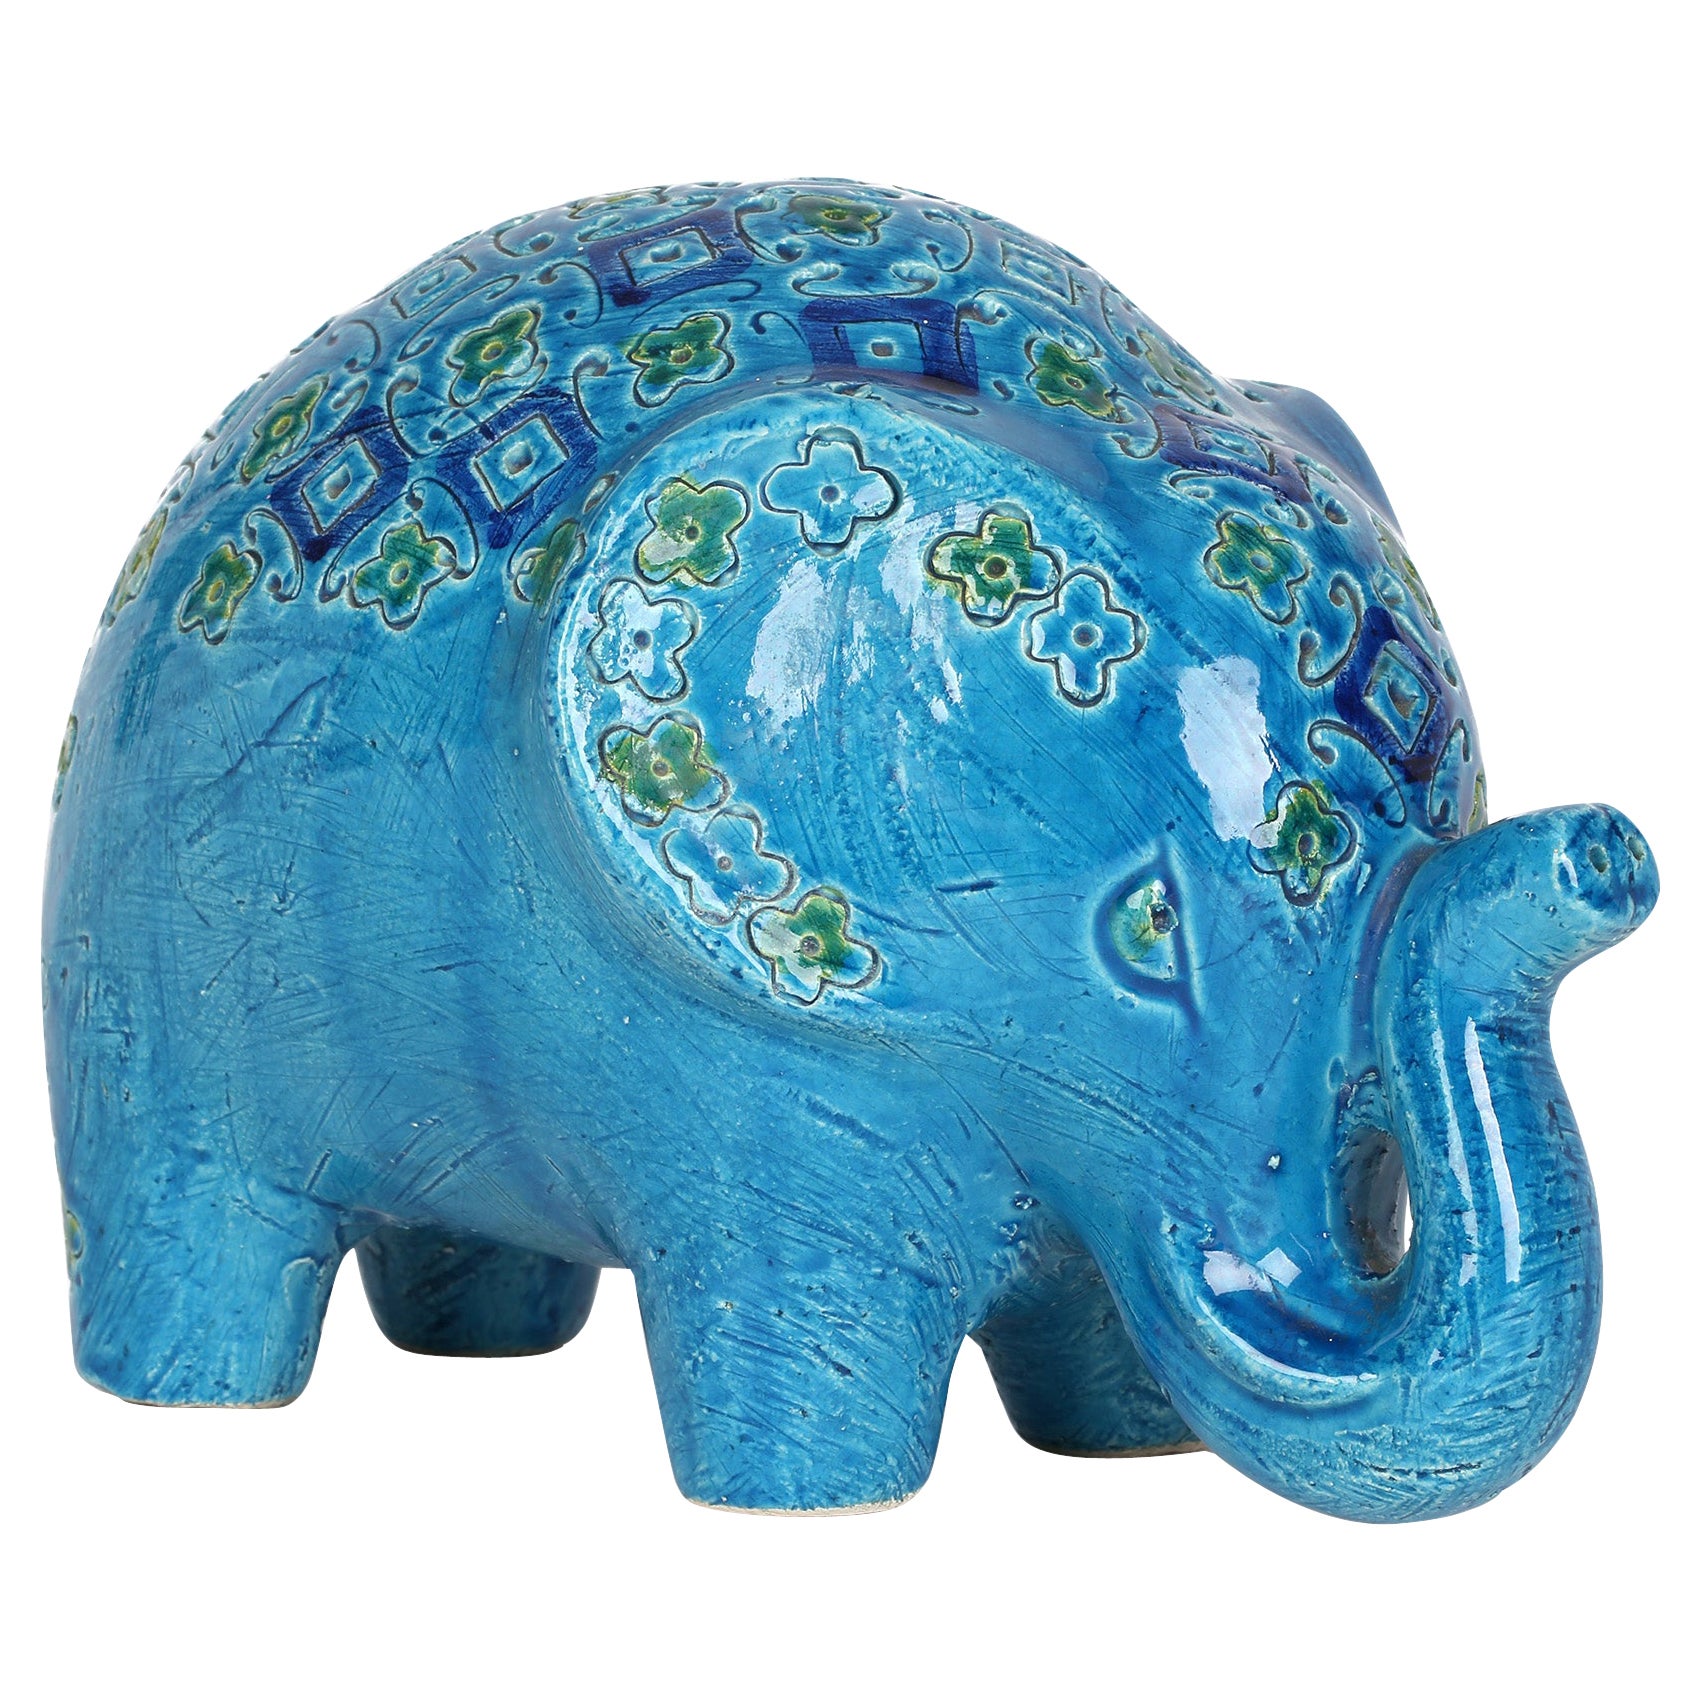 Aldo Londi Italian Bitossi Rimini Blu Stylized Pottery Elephant Figure